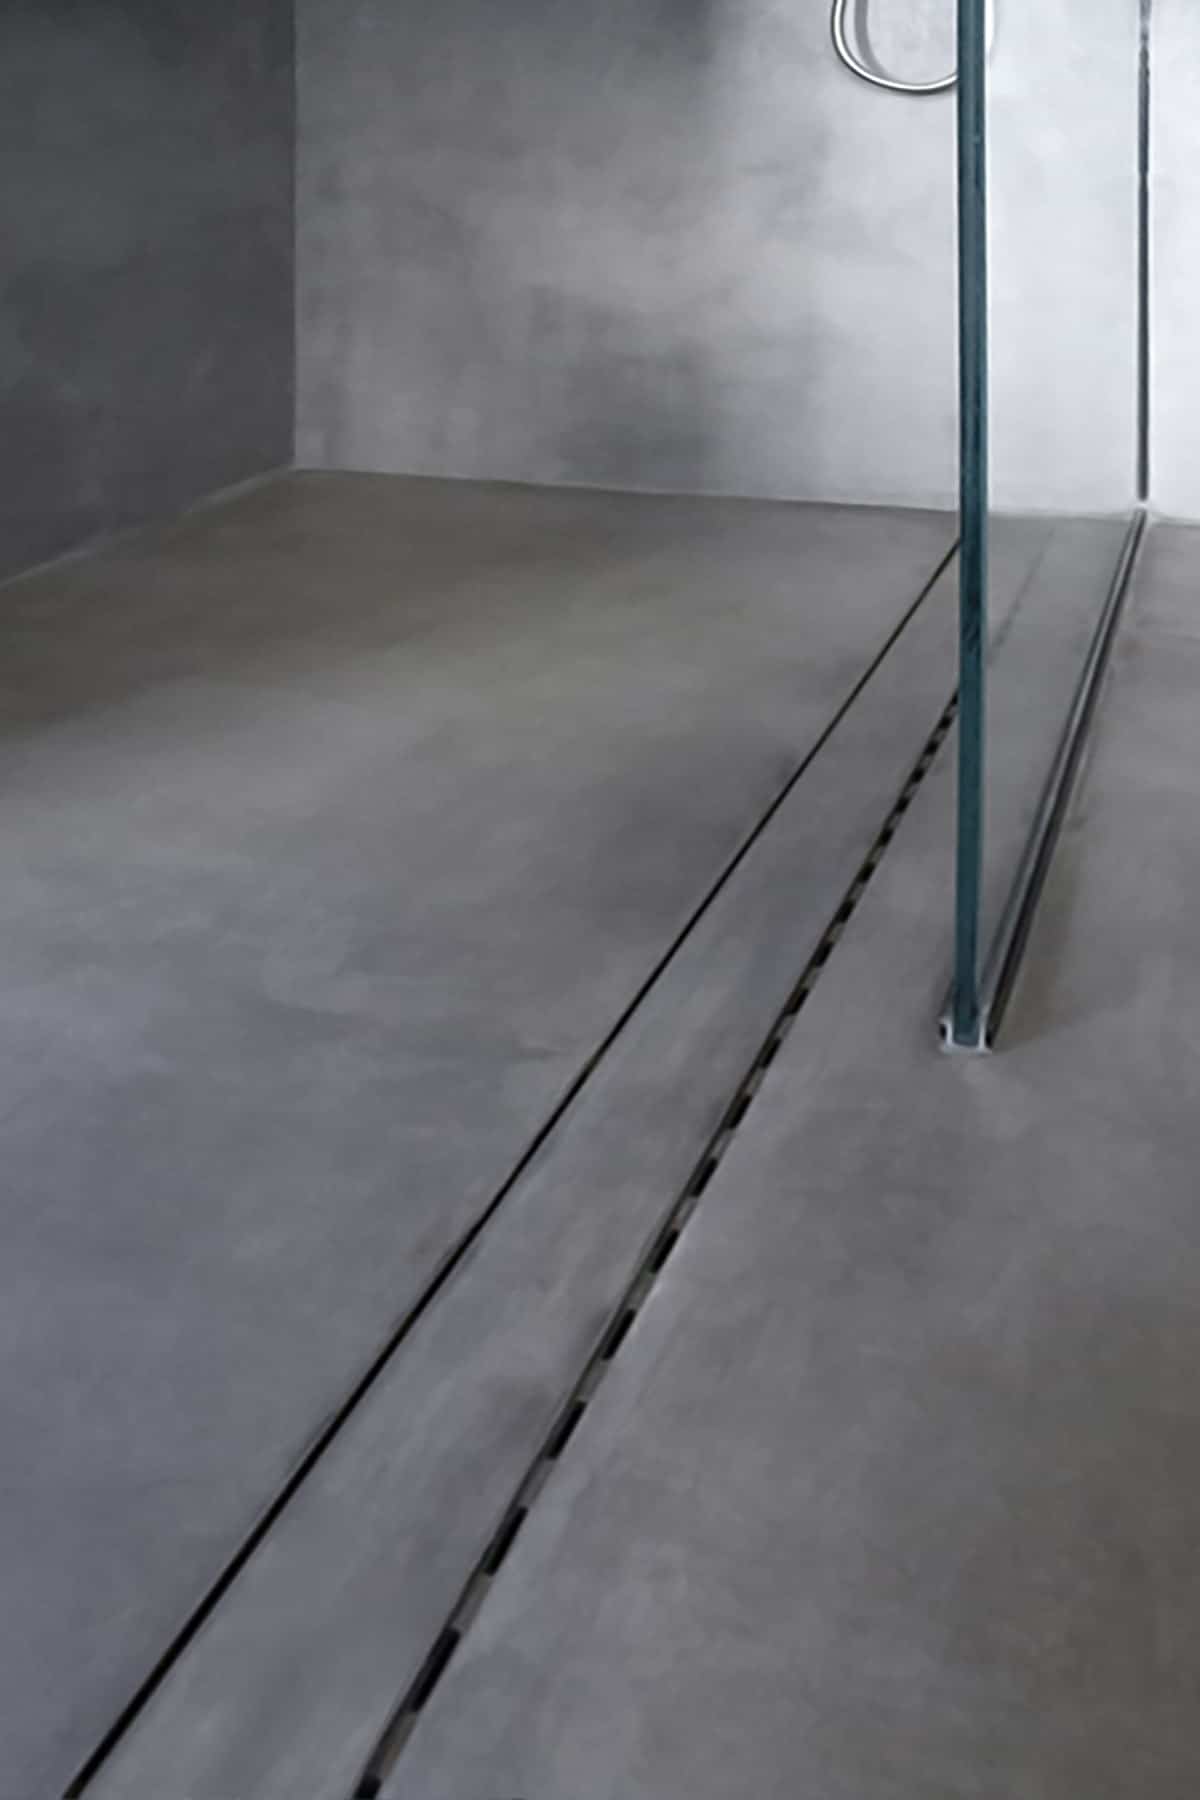 Linear Shower Drain in a Concrete Floor